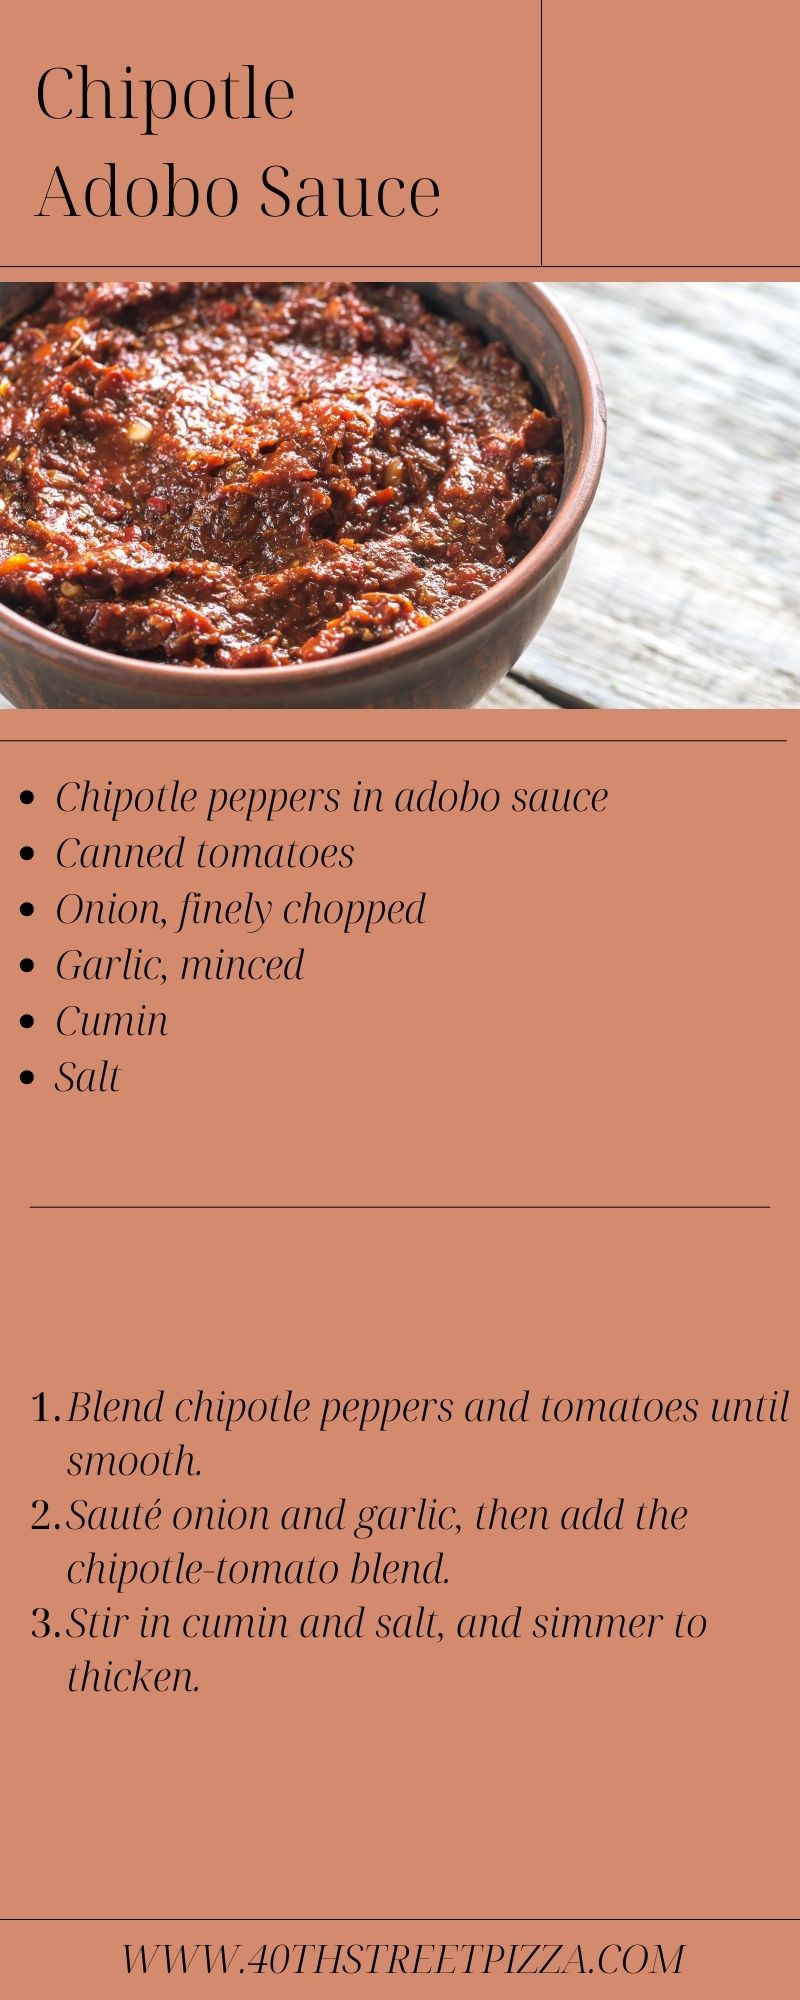 Chipotle Adobo Sauce infographic